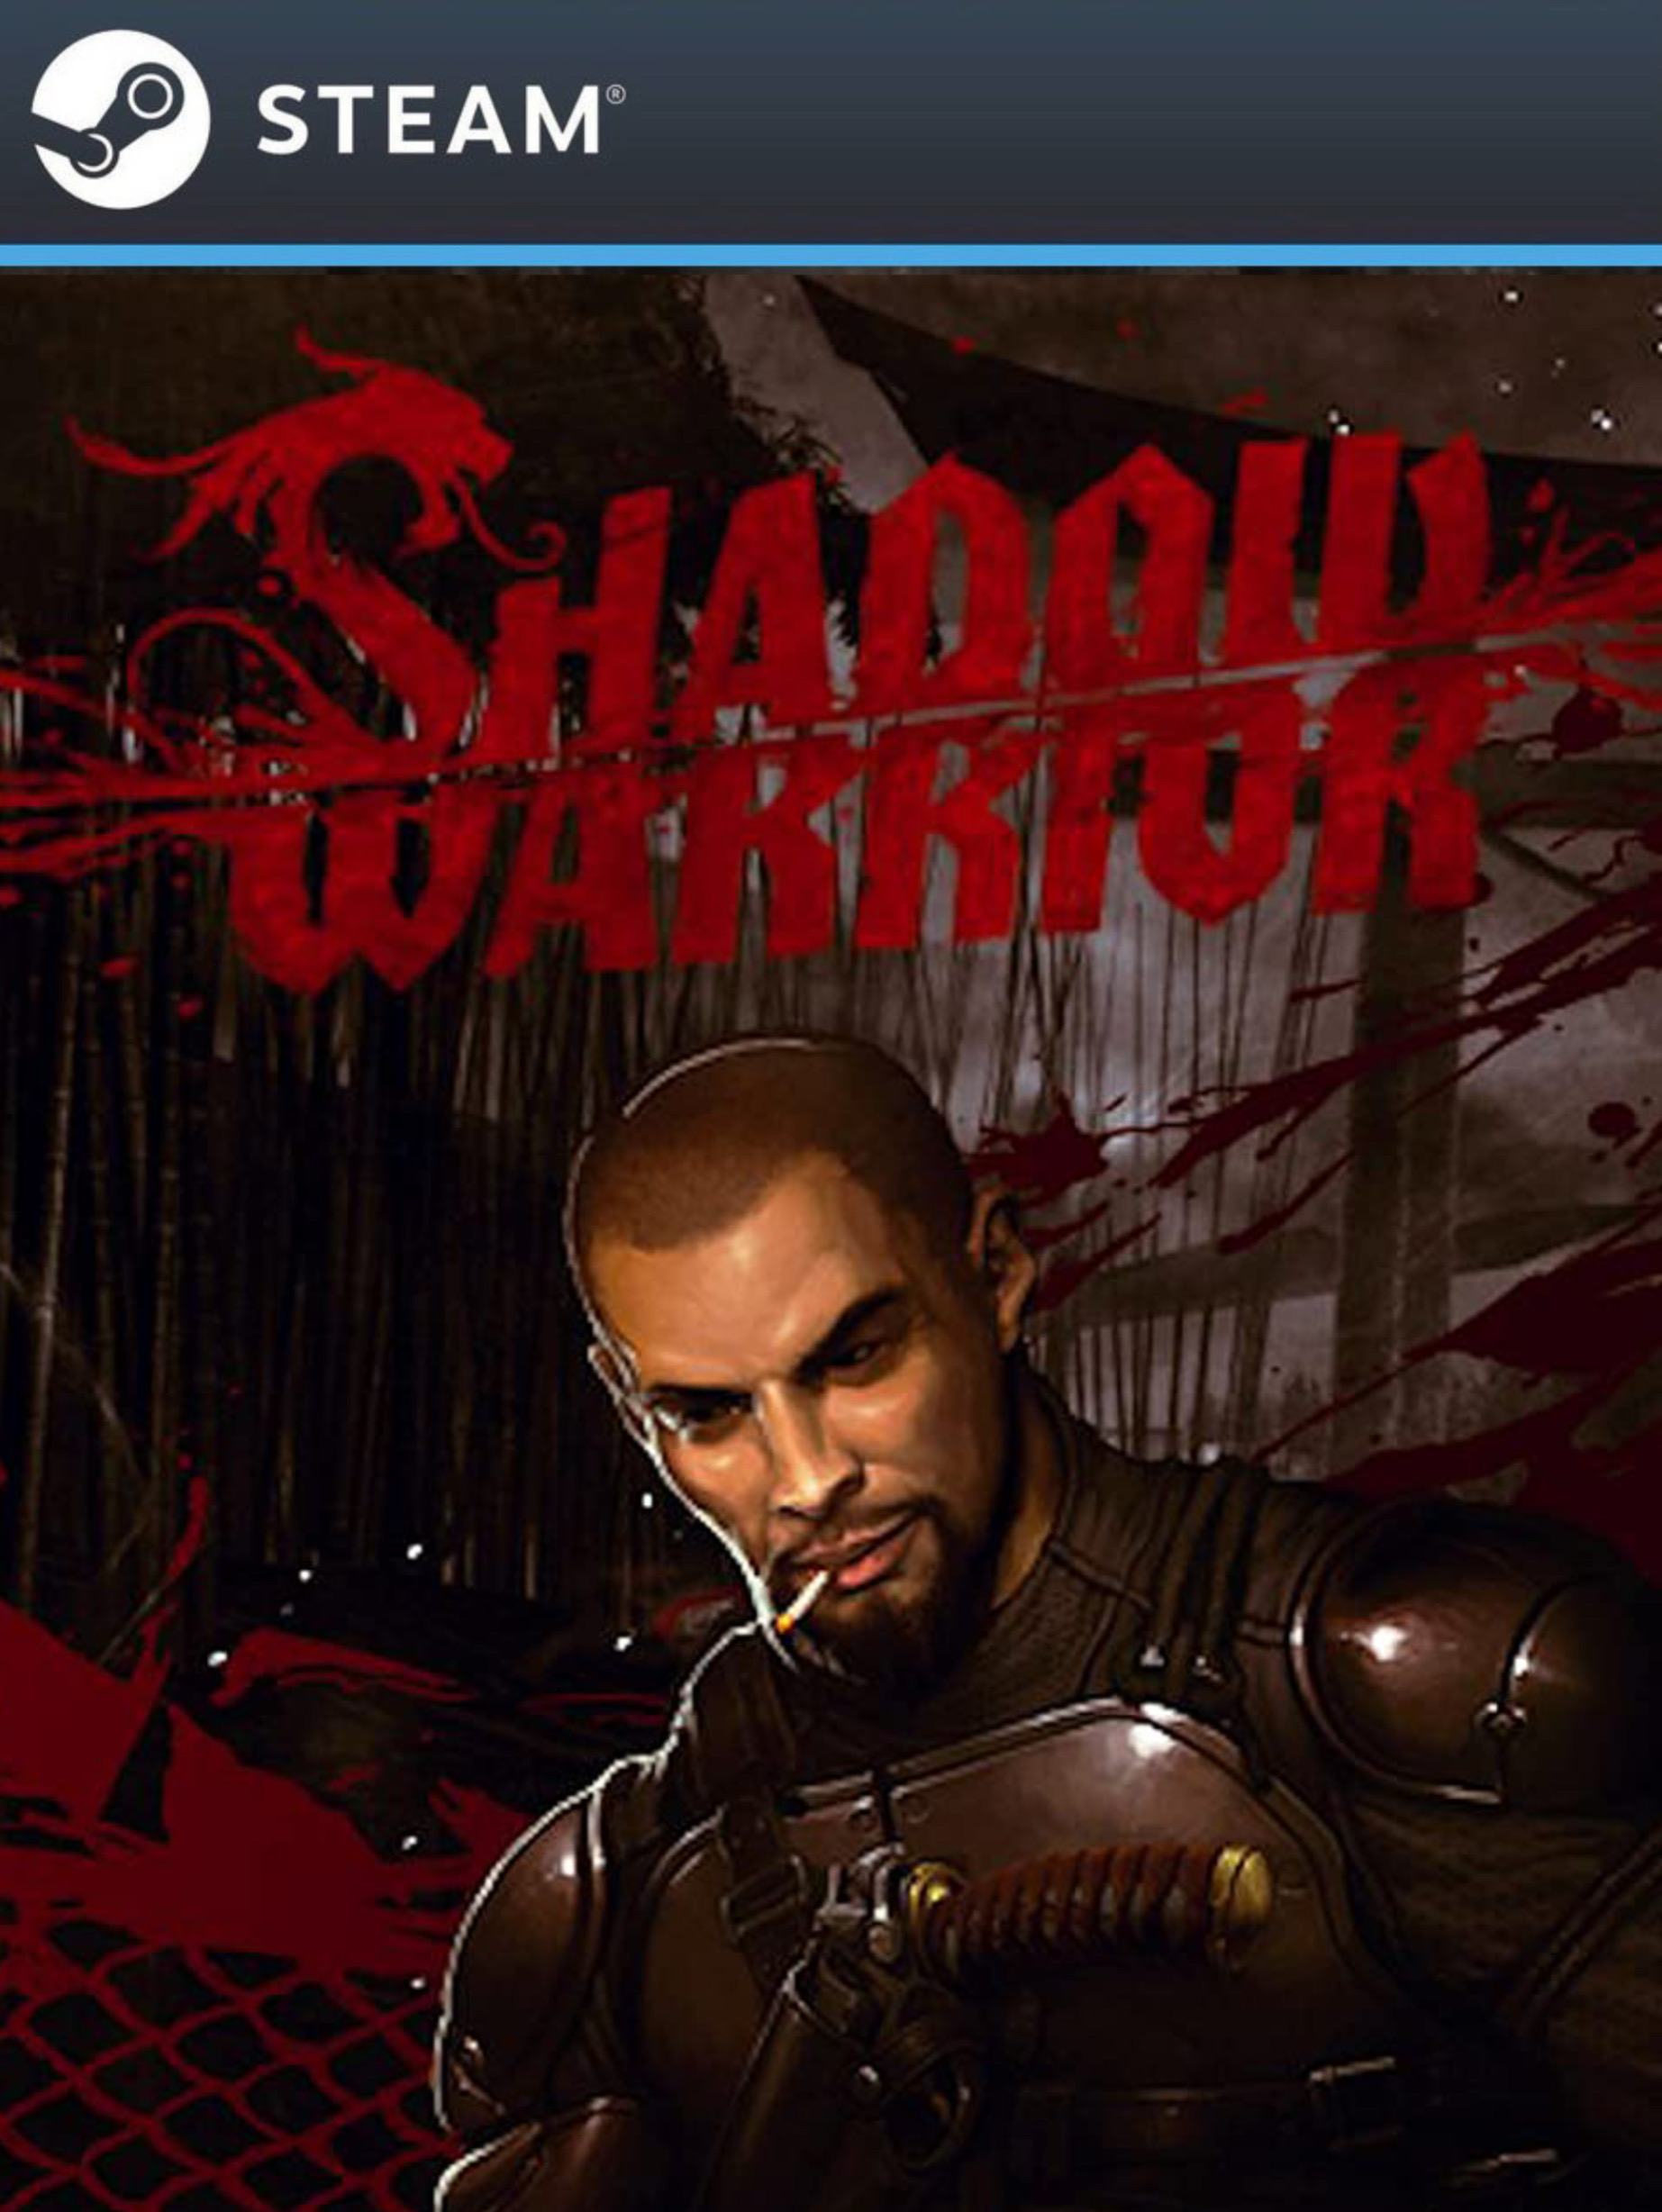 Shadow warrior купить